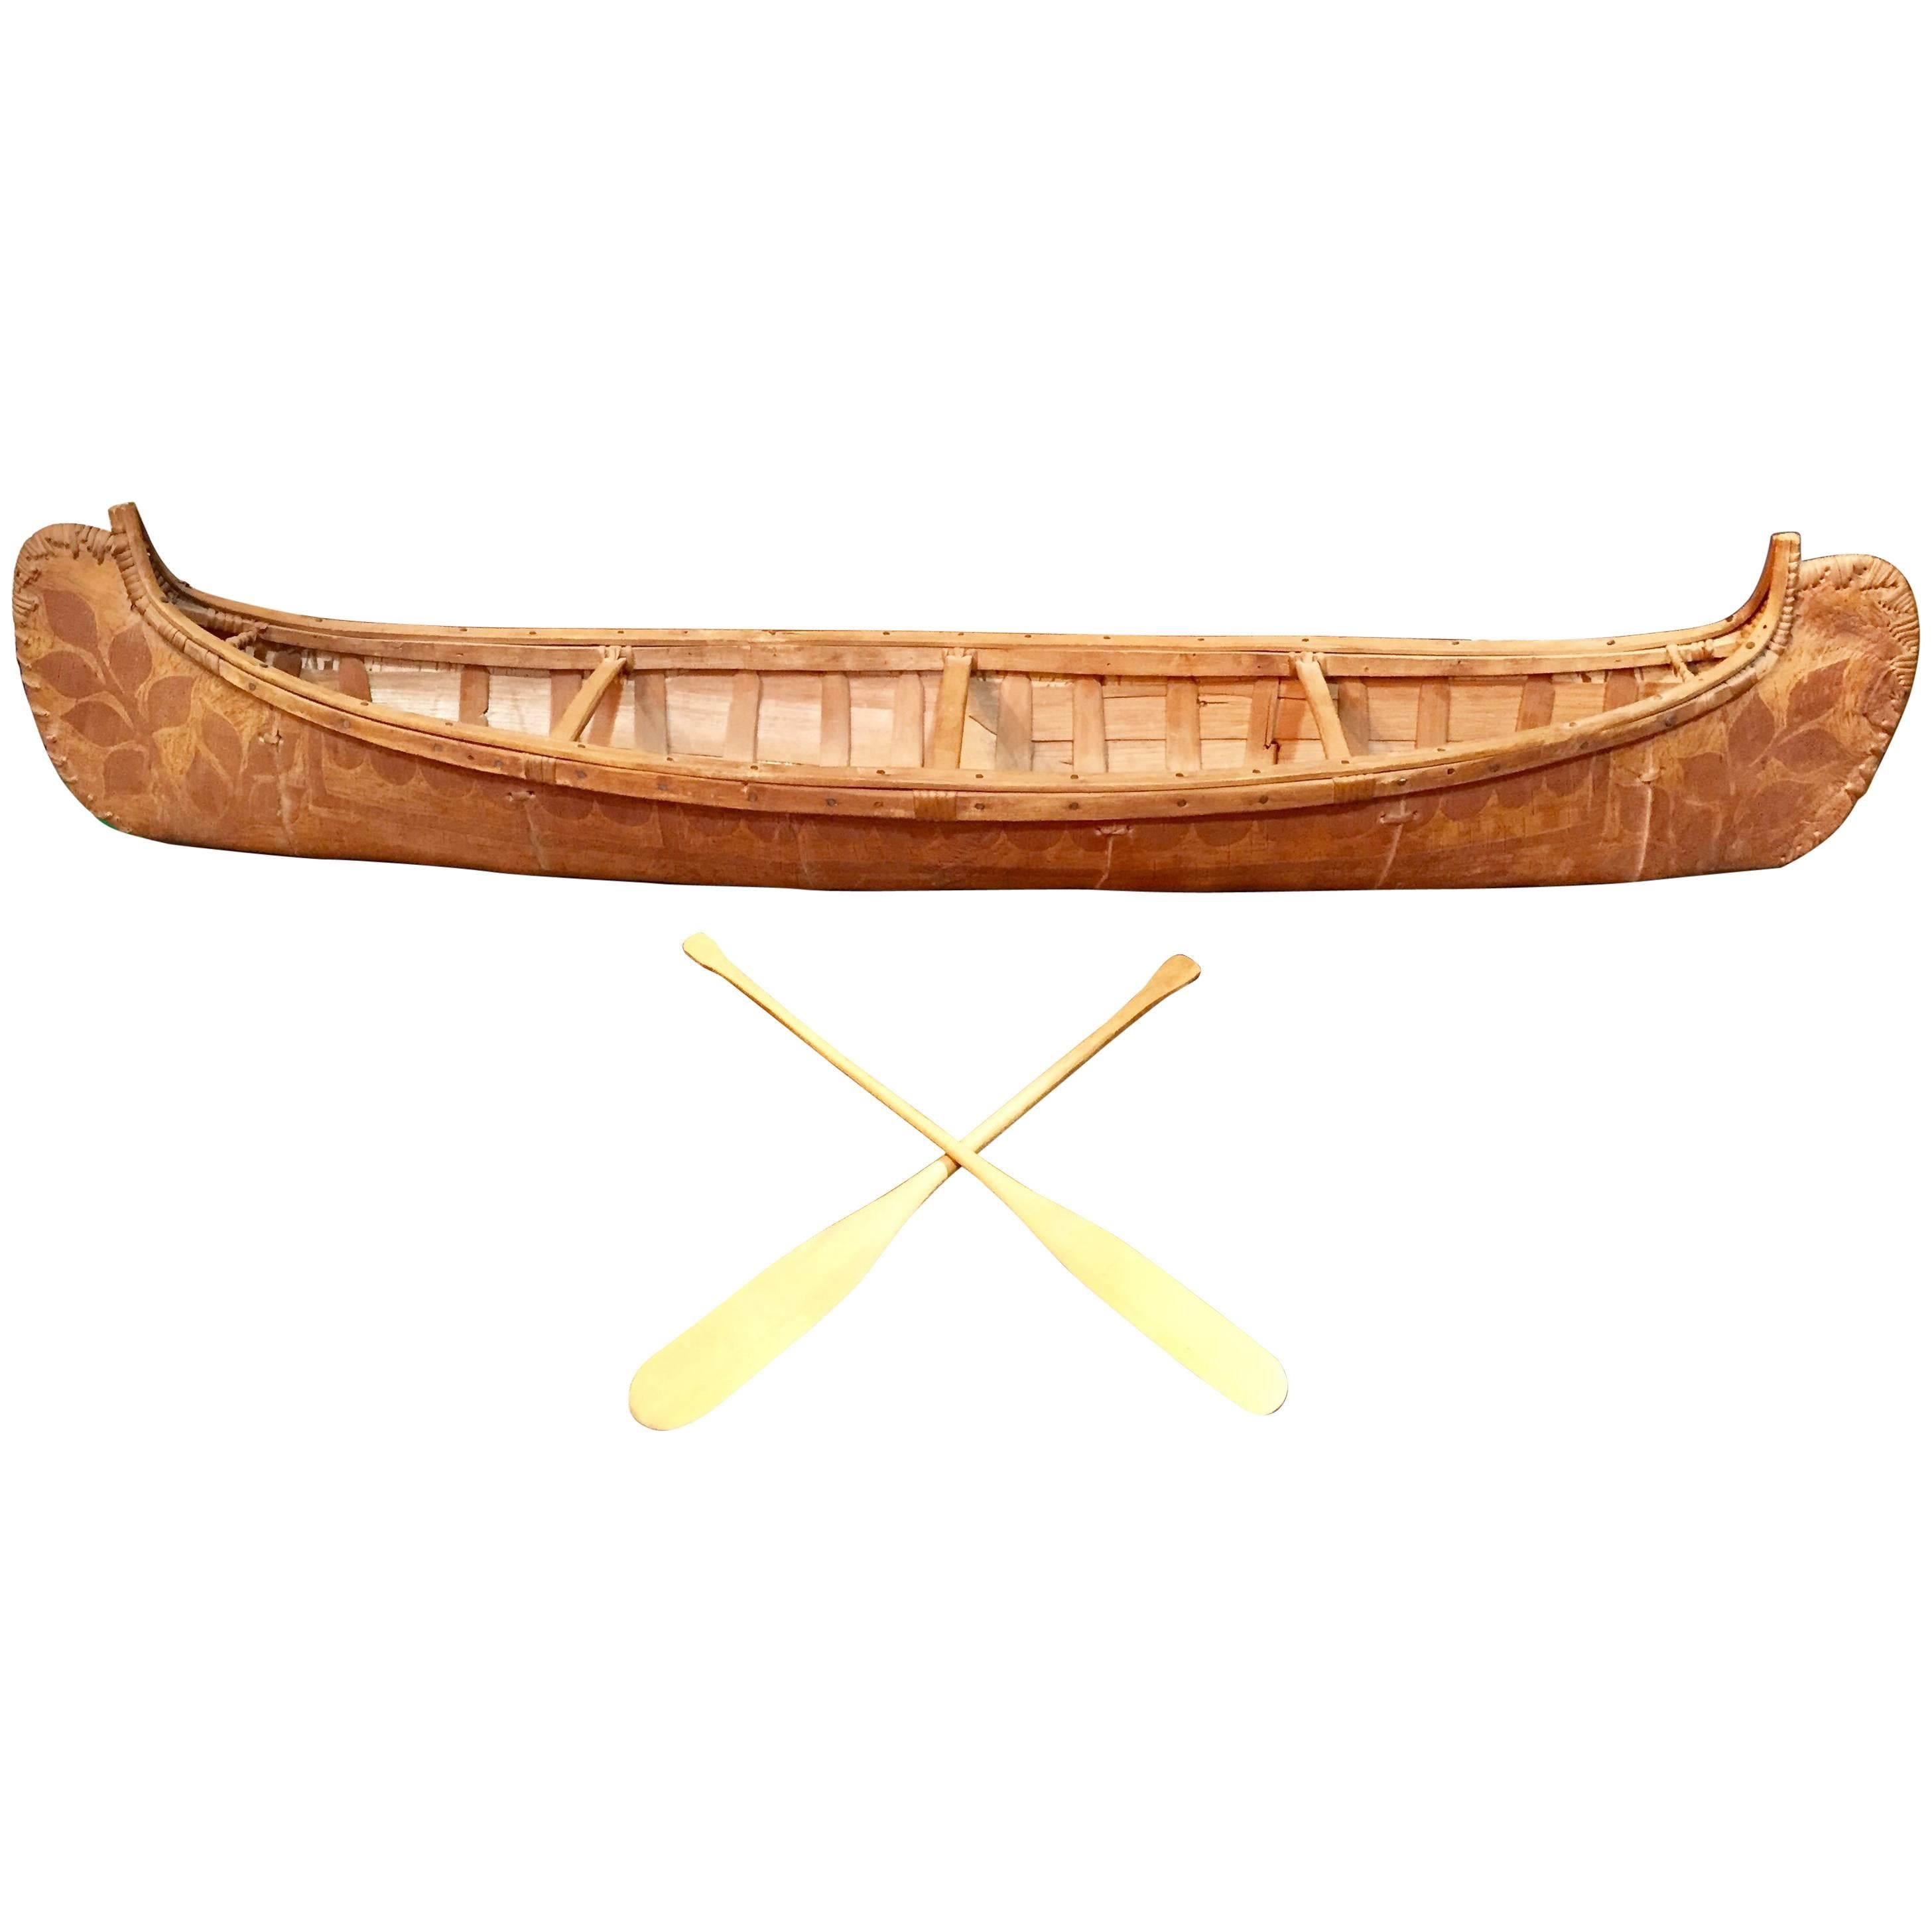 Birch Canoe Model, 1930s Maine